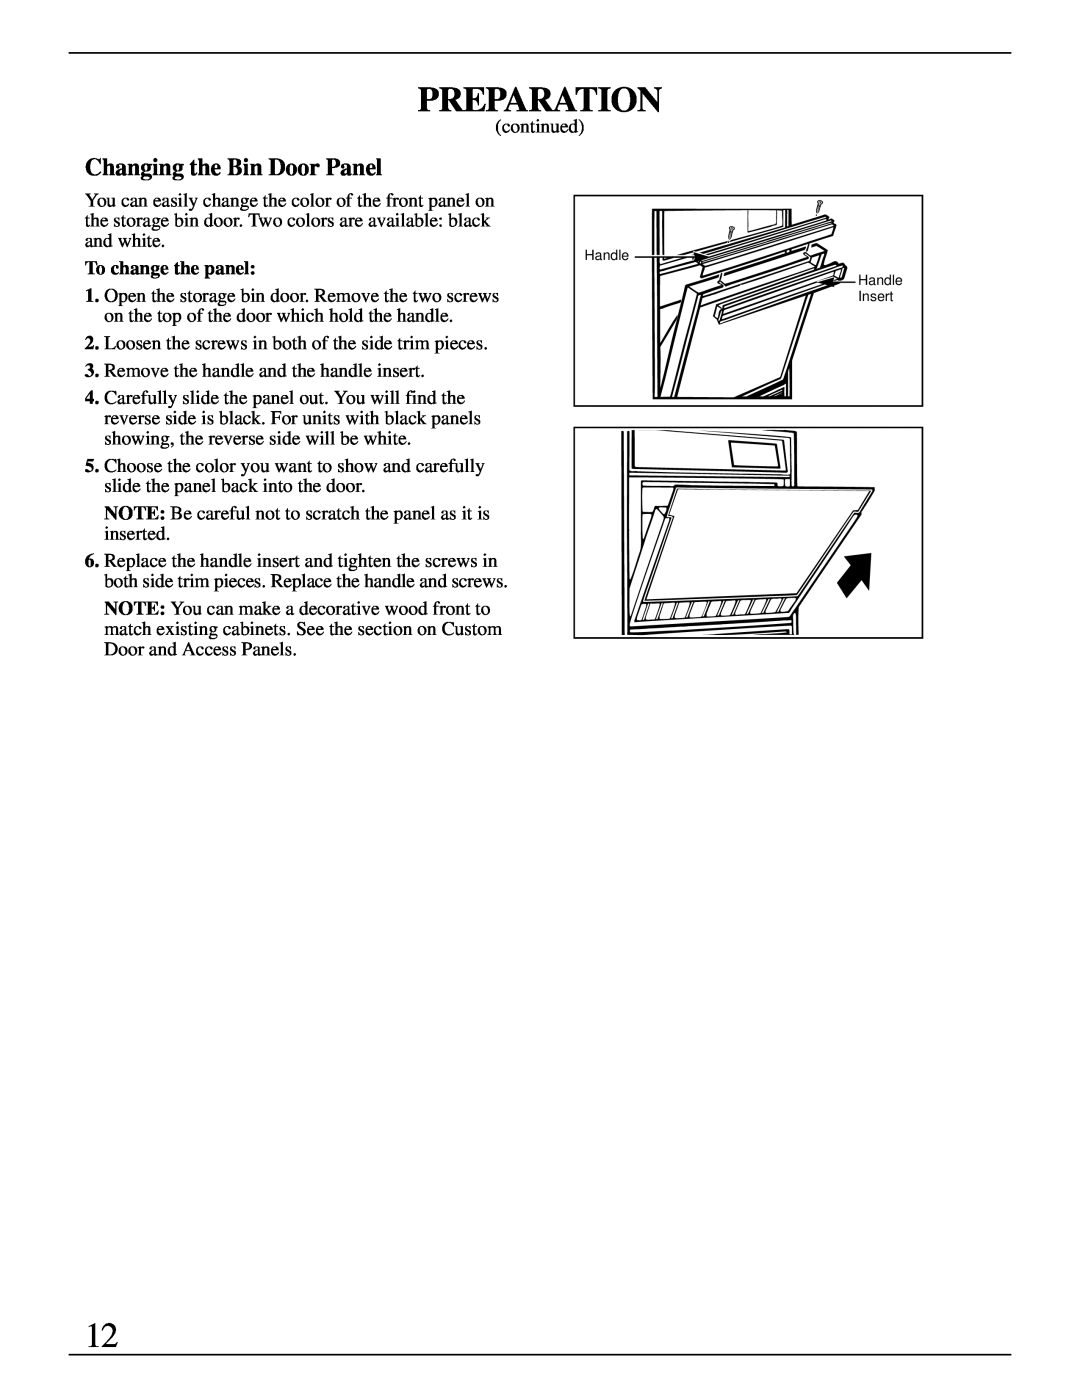 GE Monogram ZDIW50 installation instructions Changing the Bin Door Panel, Preparation, To change the panel 